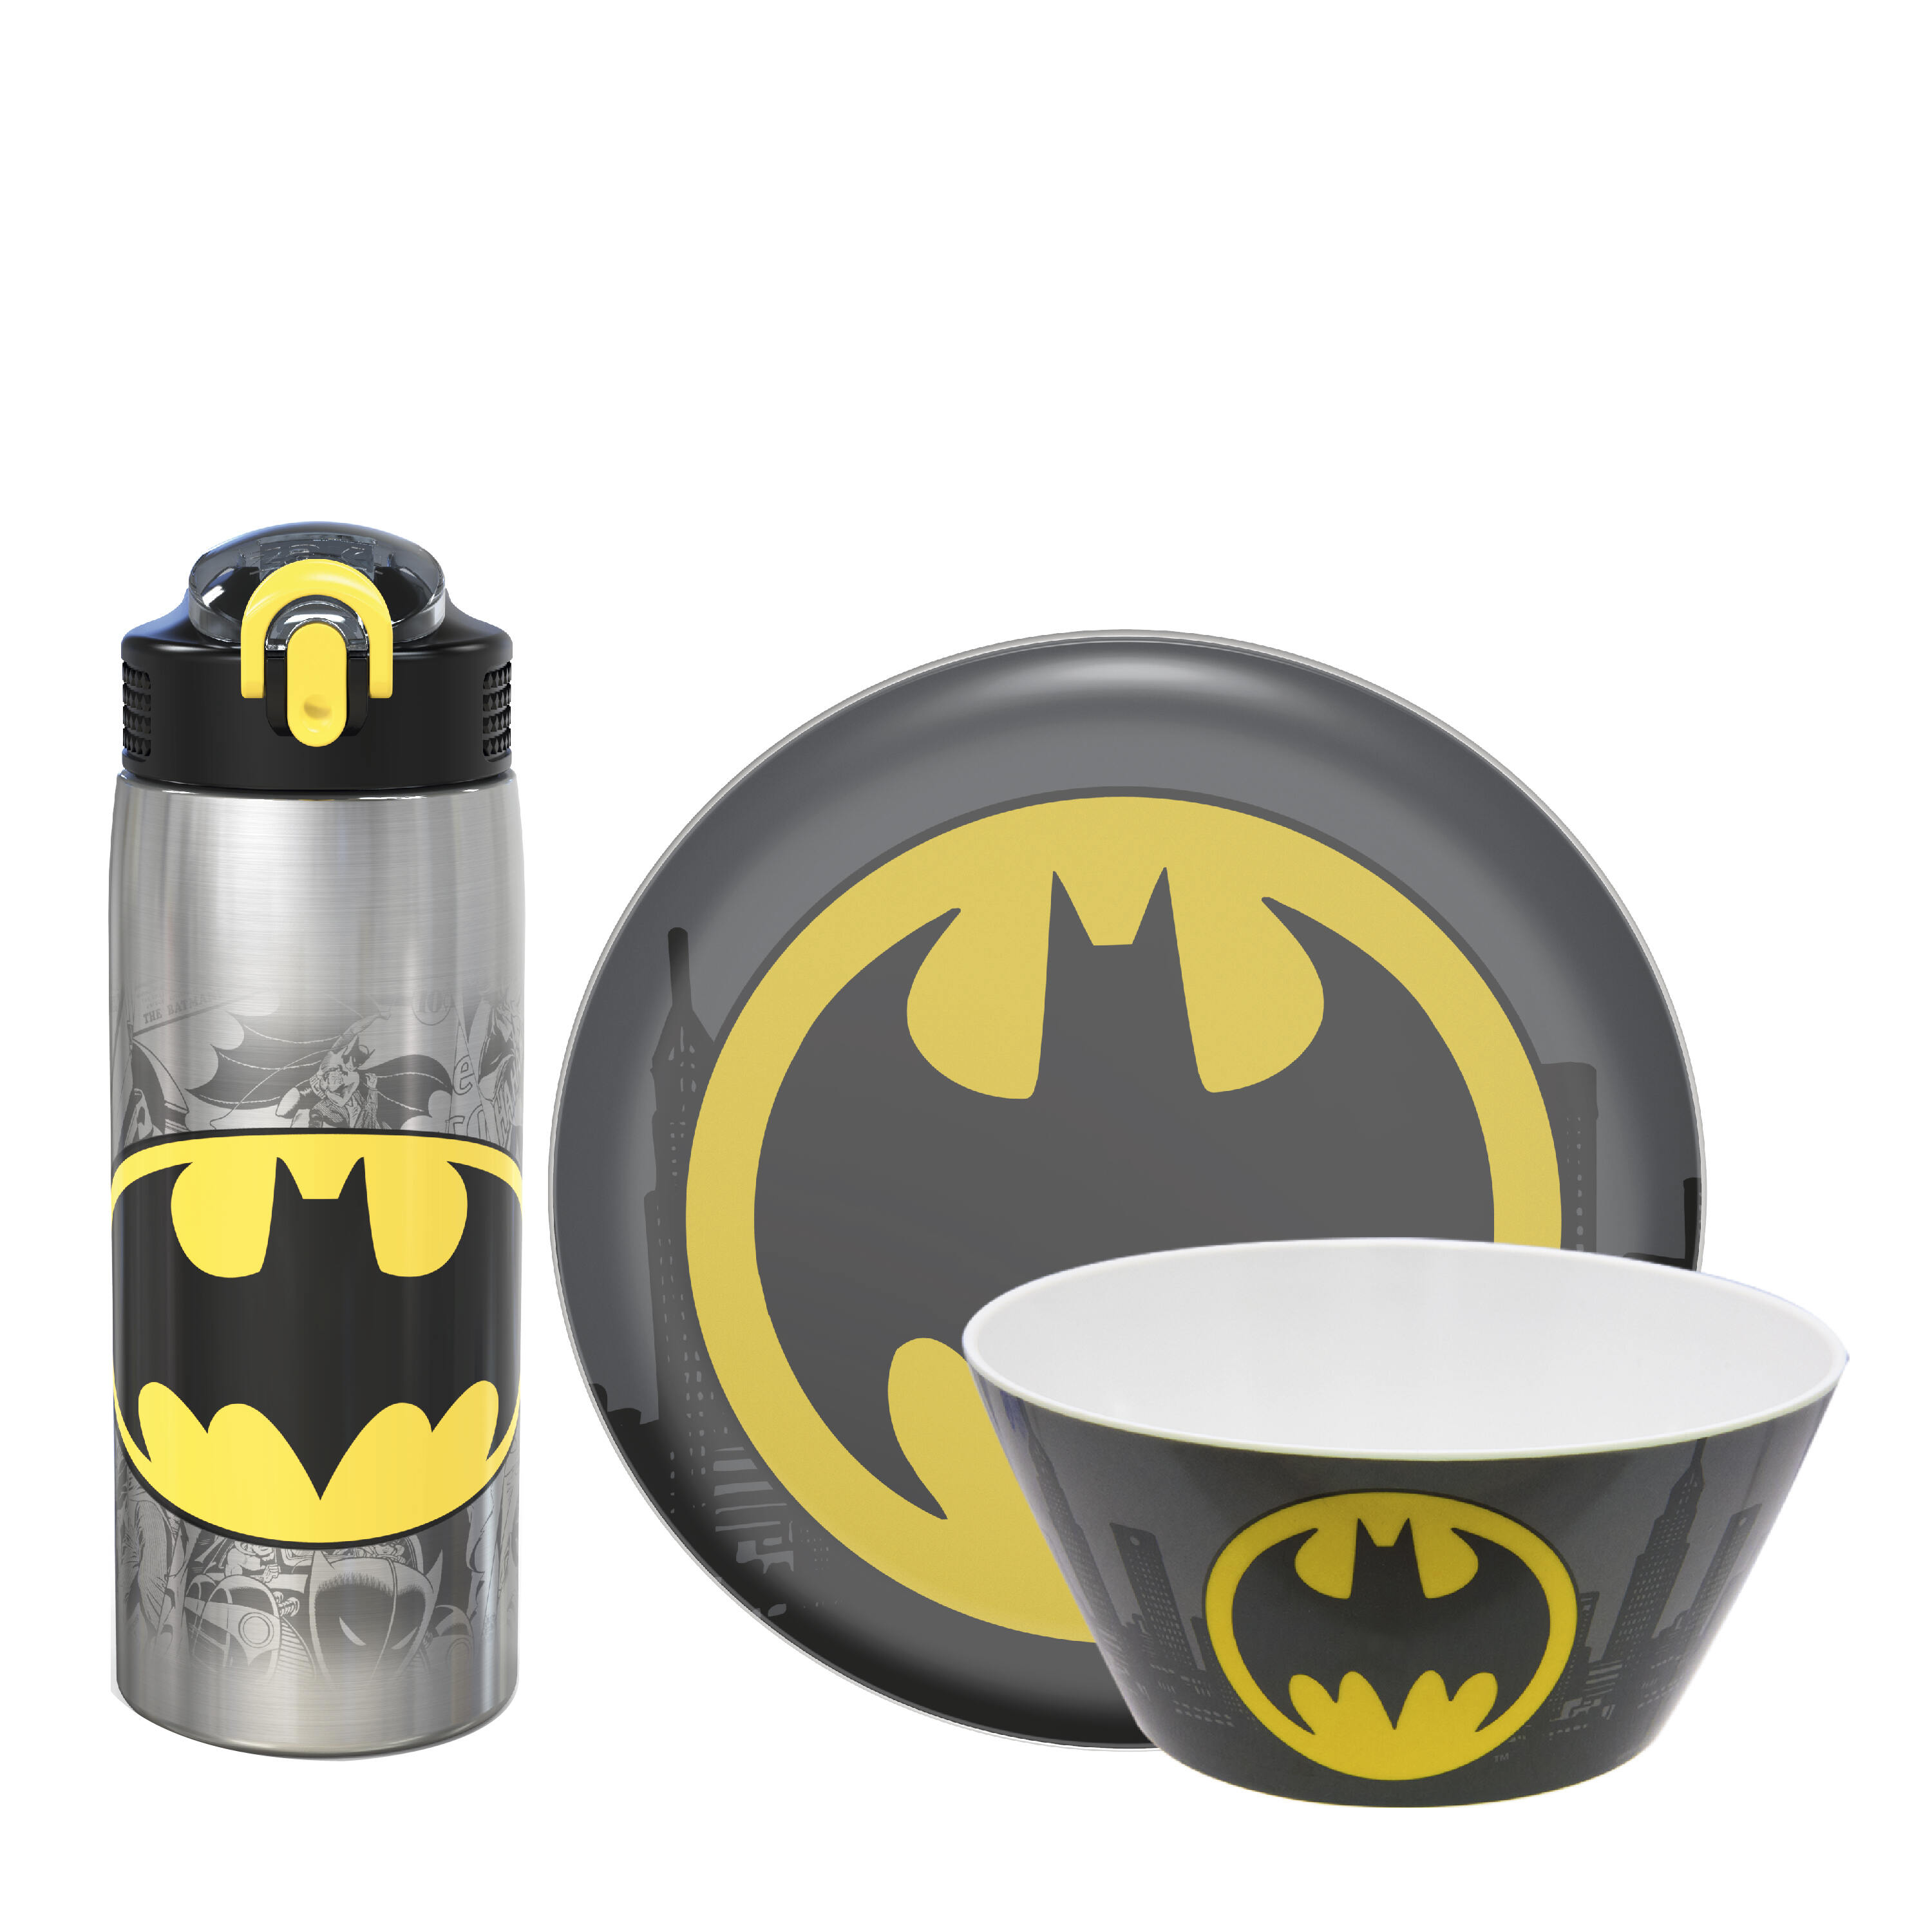 Batman Core Zak Designs DC Comics Melamine Plates 